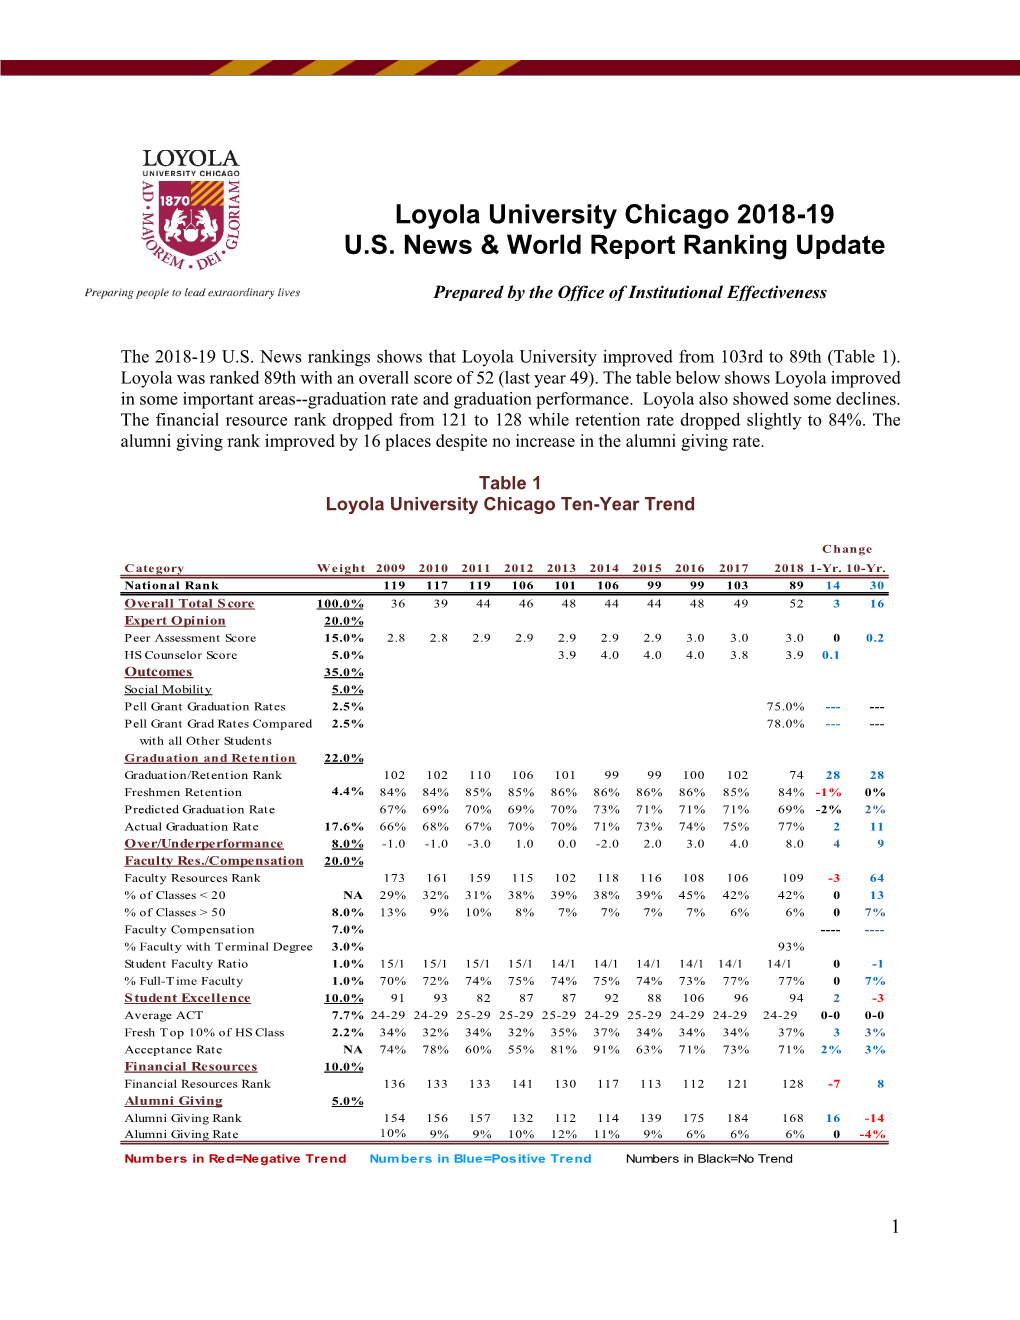 Loyola University Chicago 2018-19 U.S. News & World Report Ranking